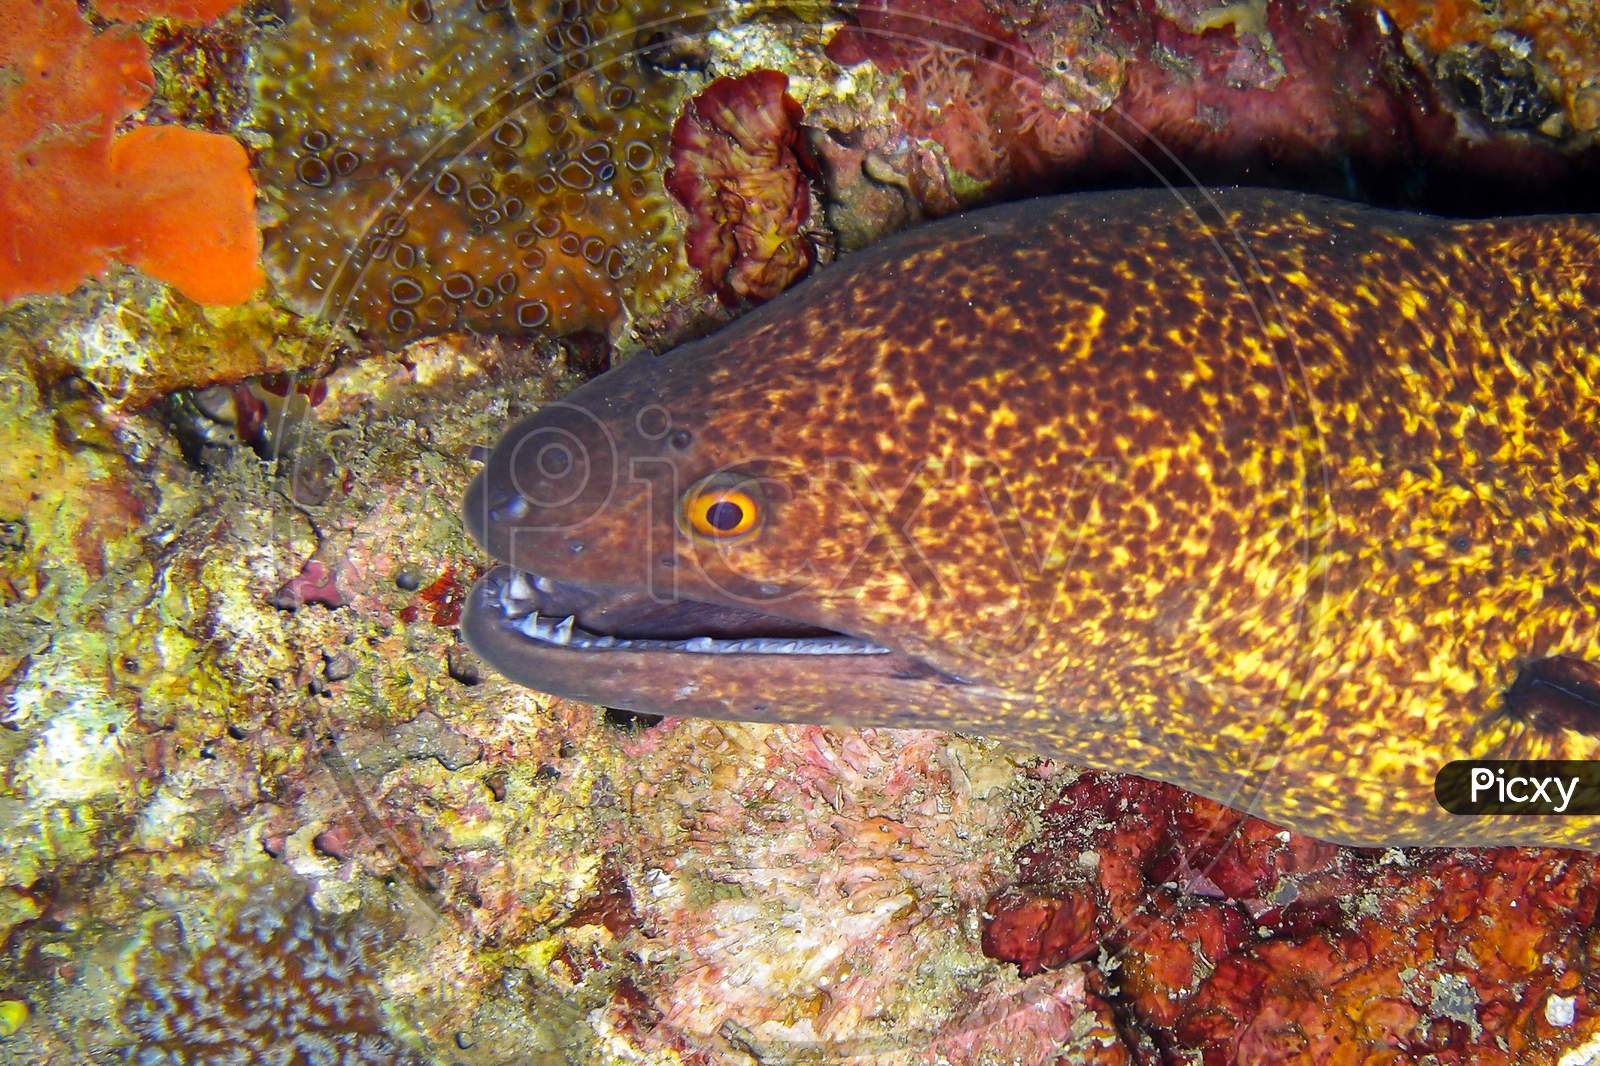 Yellow Edged Moray Eel (Gymnothorax Flavimarginatus) On The Ground In The Filipino Sea 28.11.2011